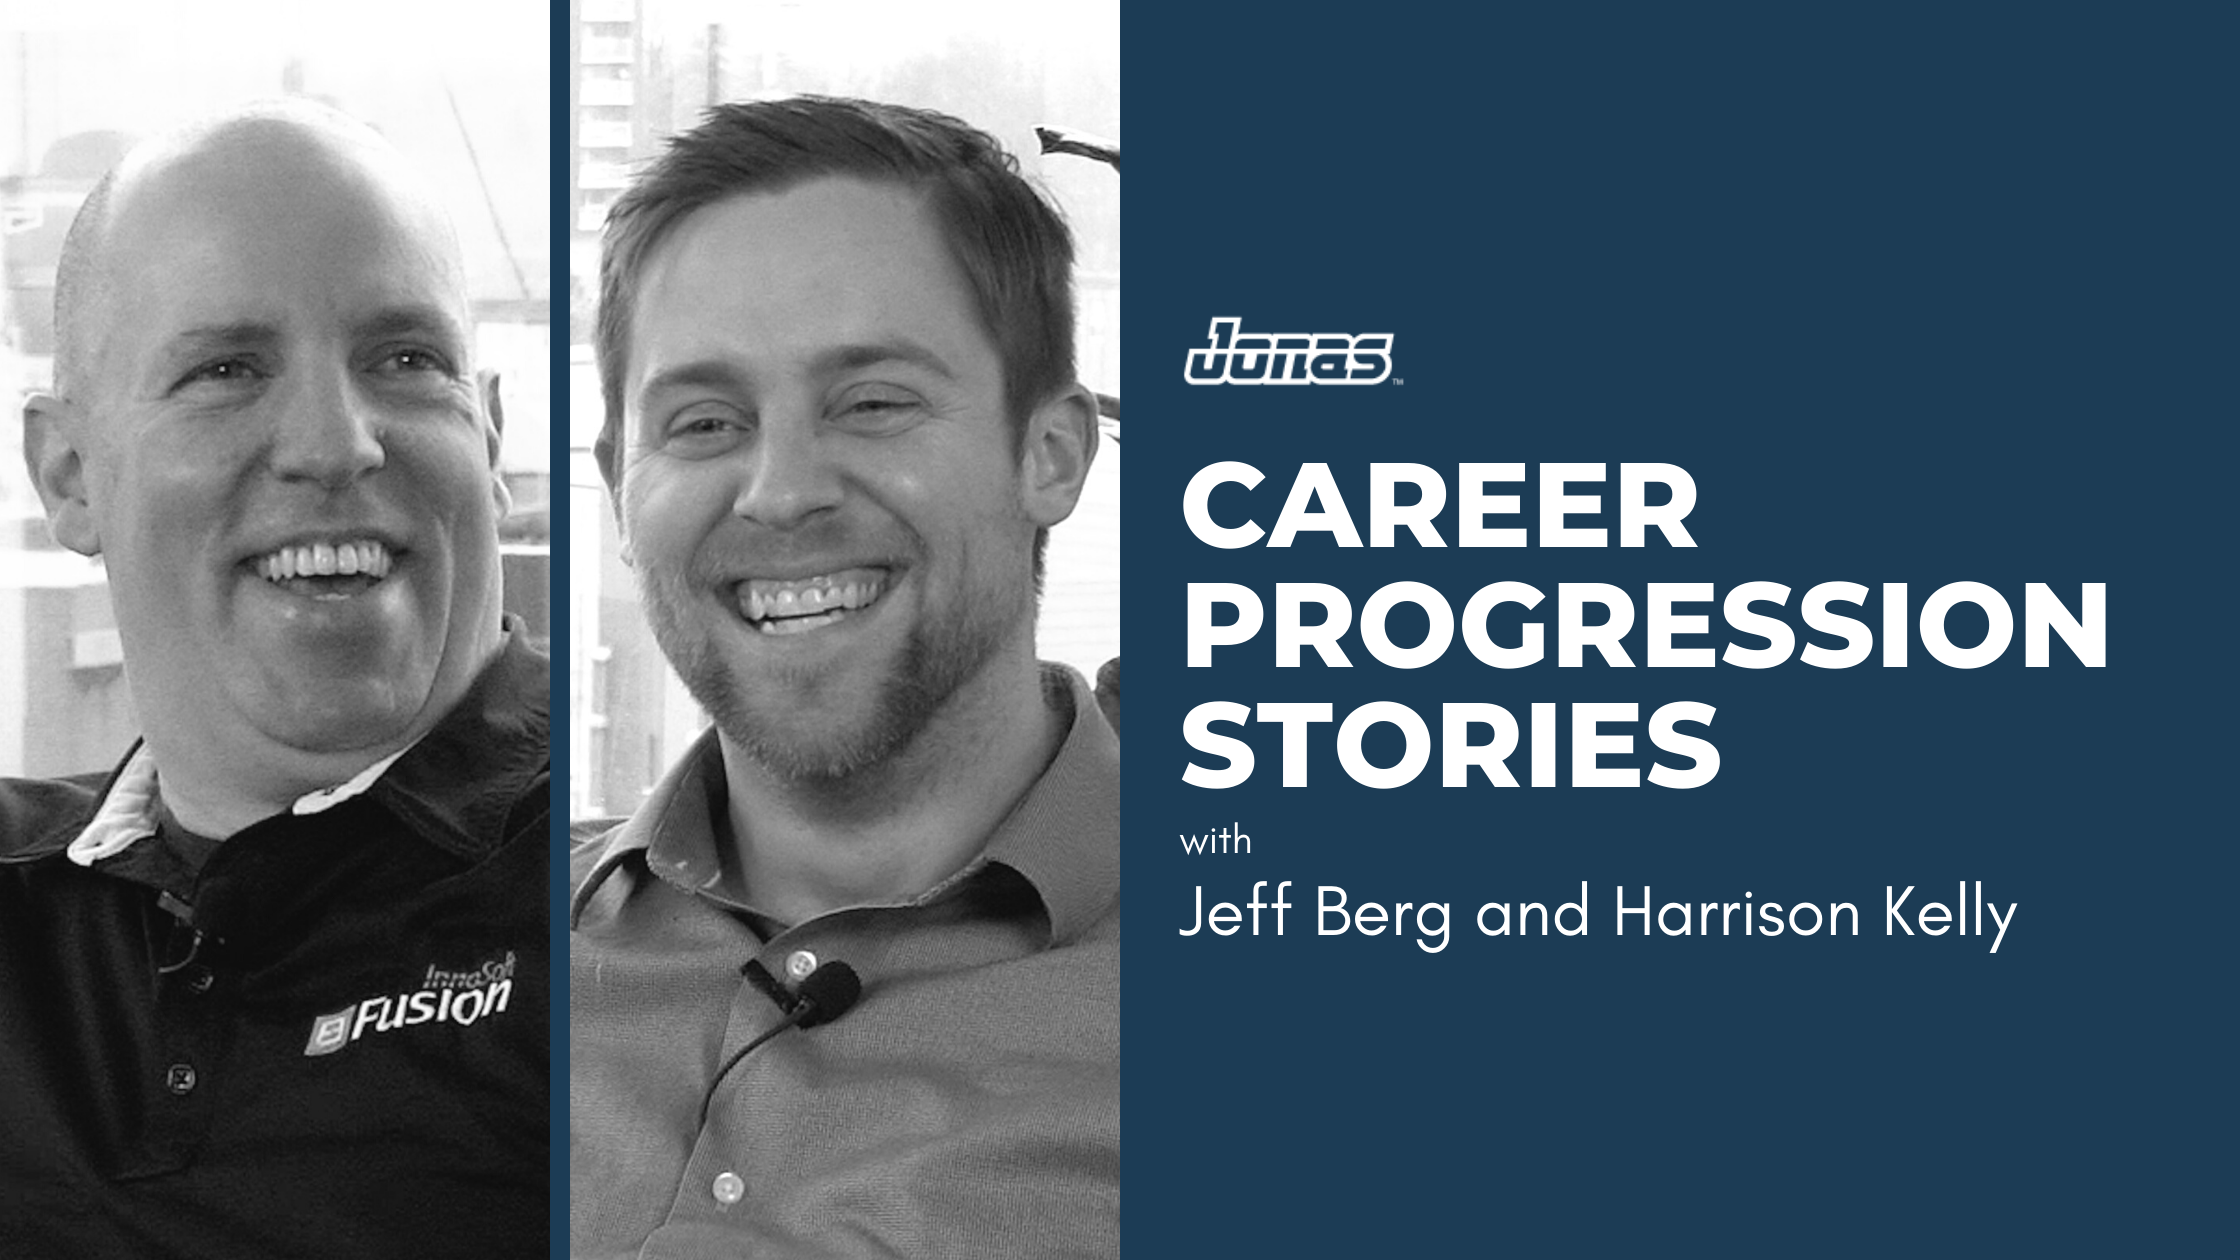 Harrison Kelly and Jeff Berg – Career Progression Stories